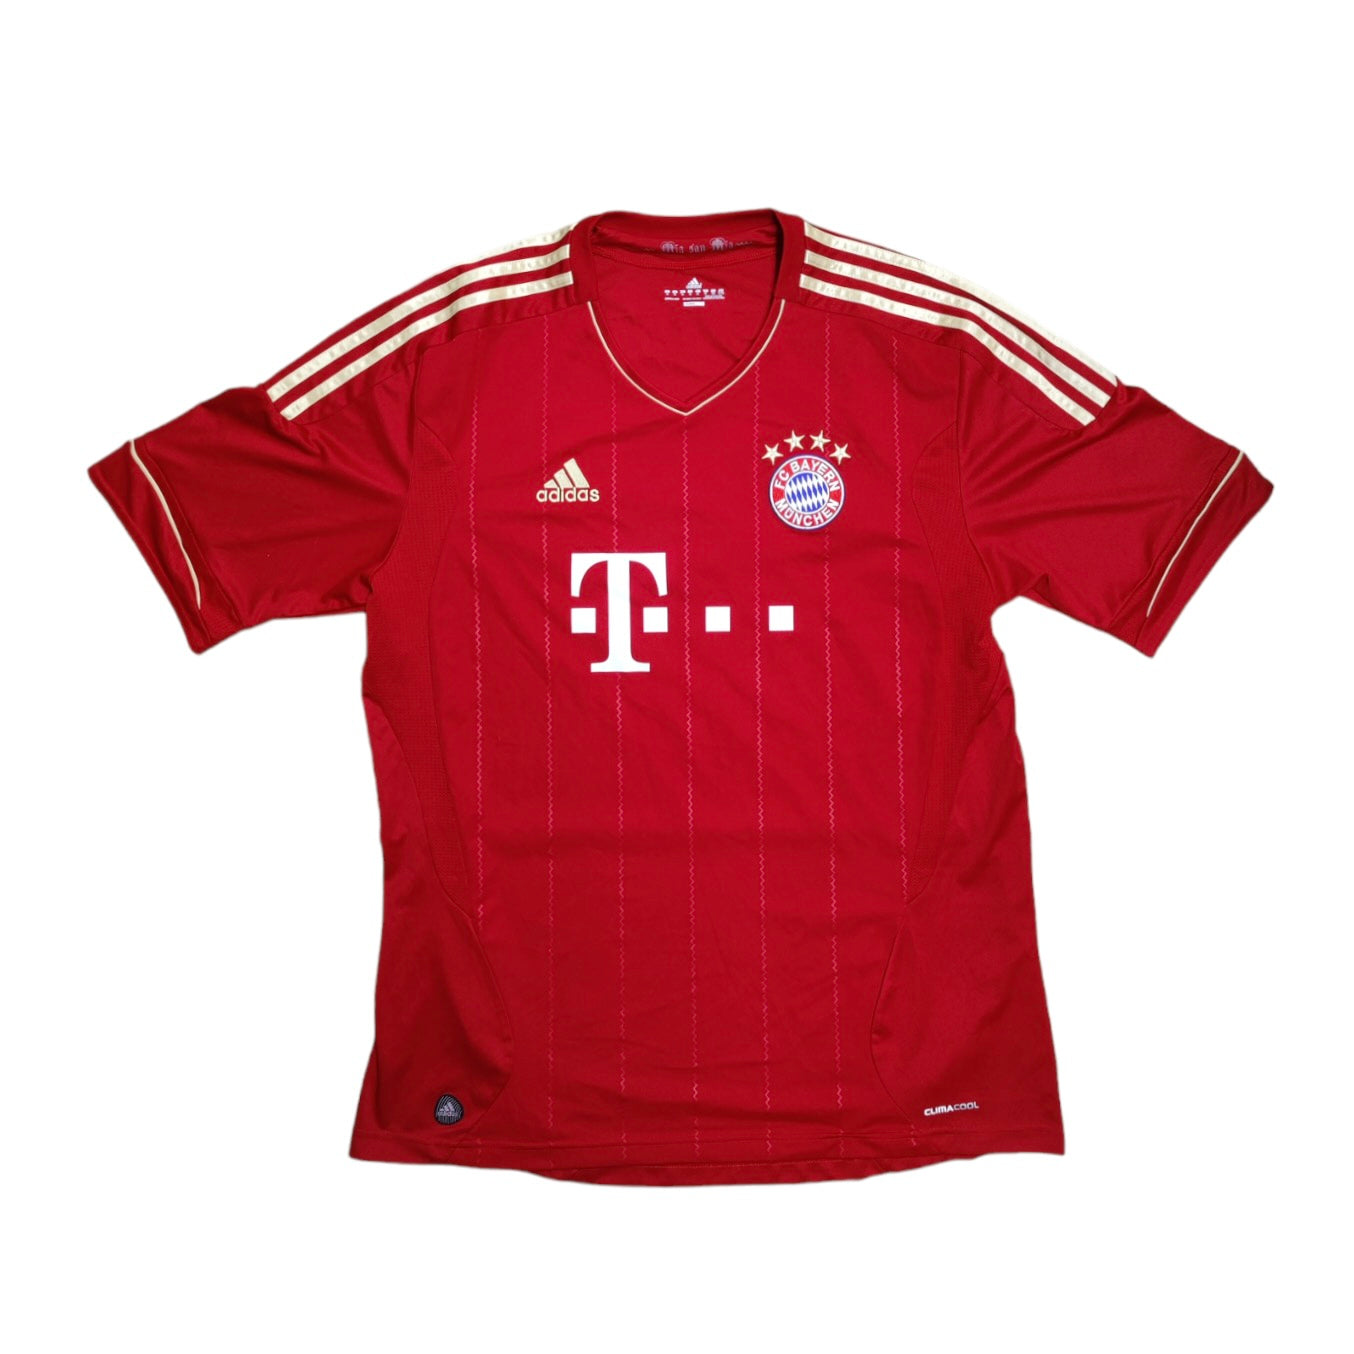 Adidas Bayern Munchen 2011/2012 Football Jersey